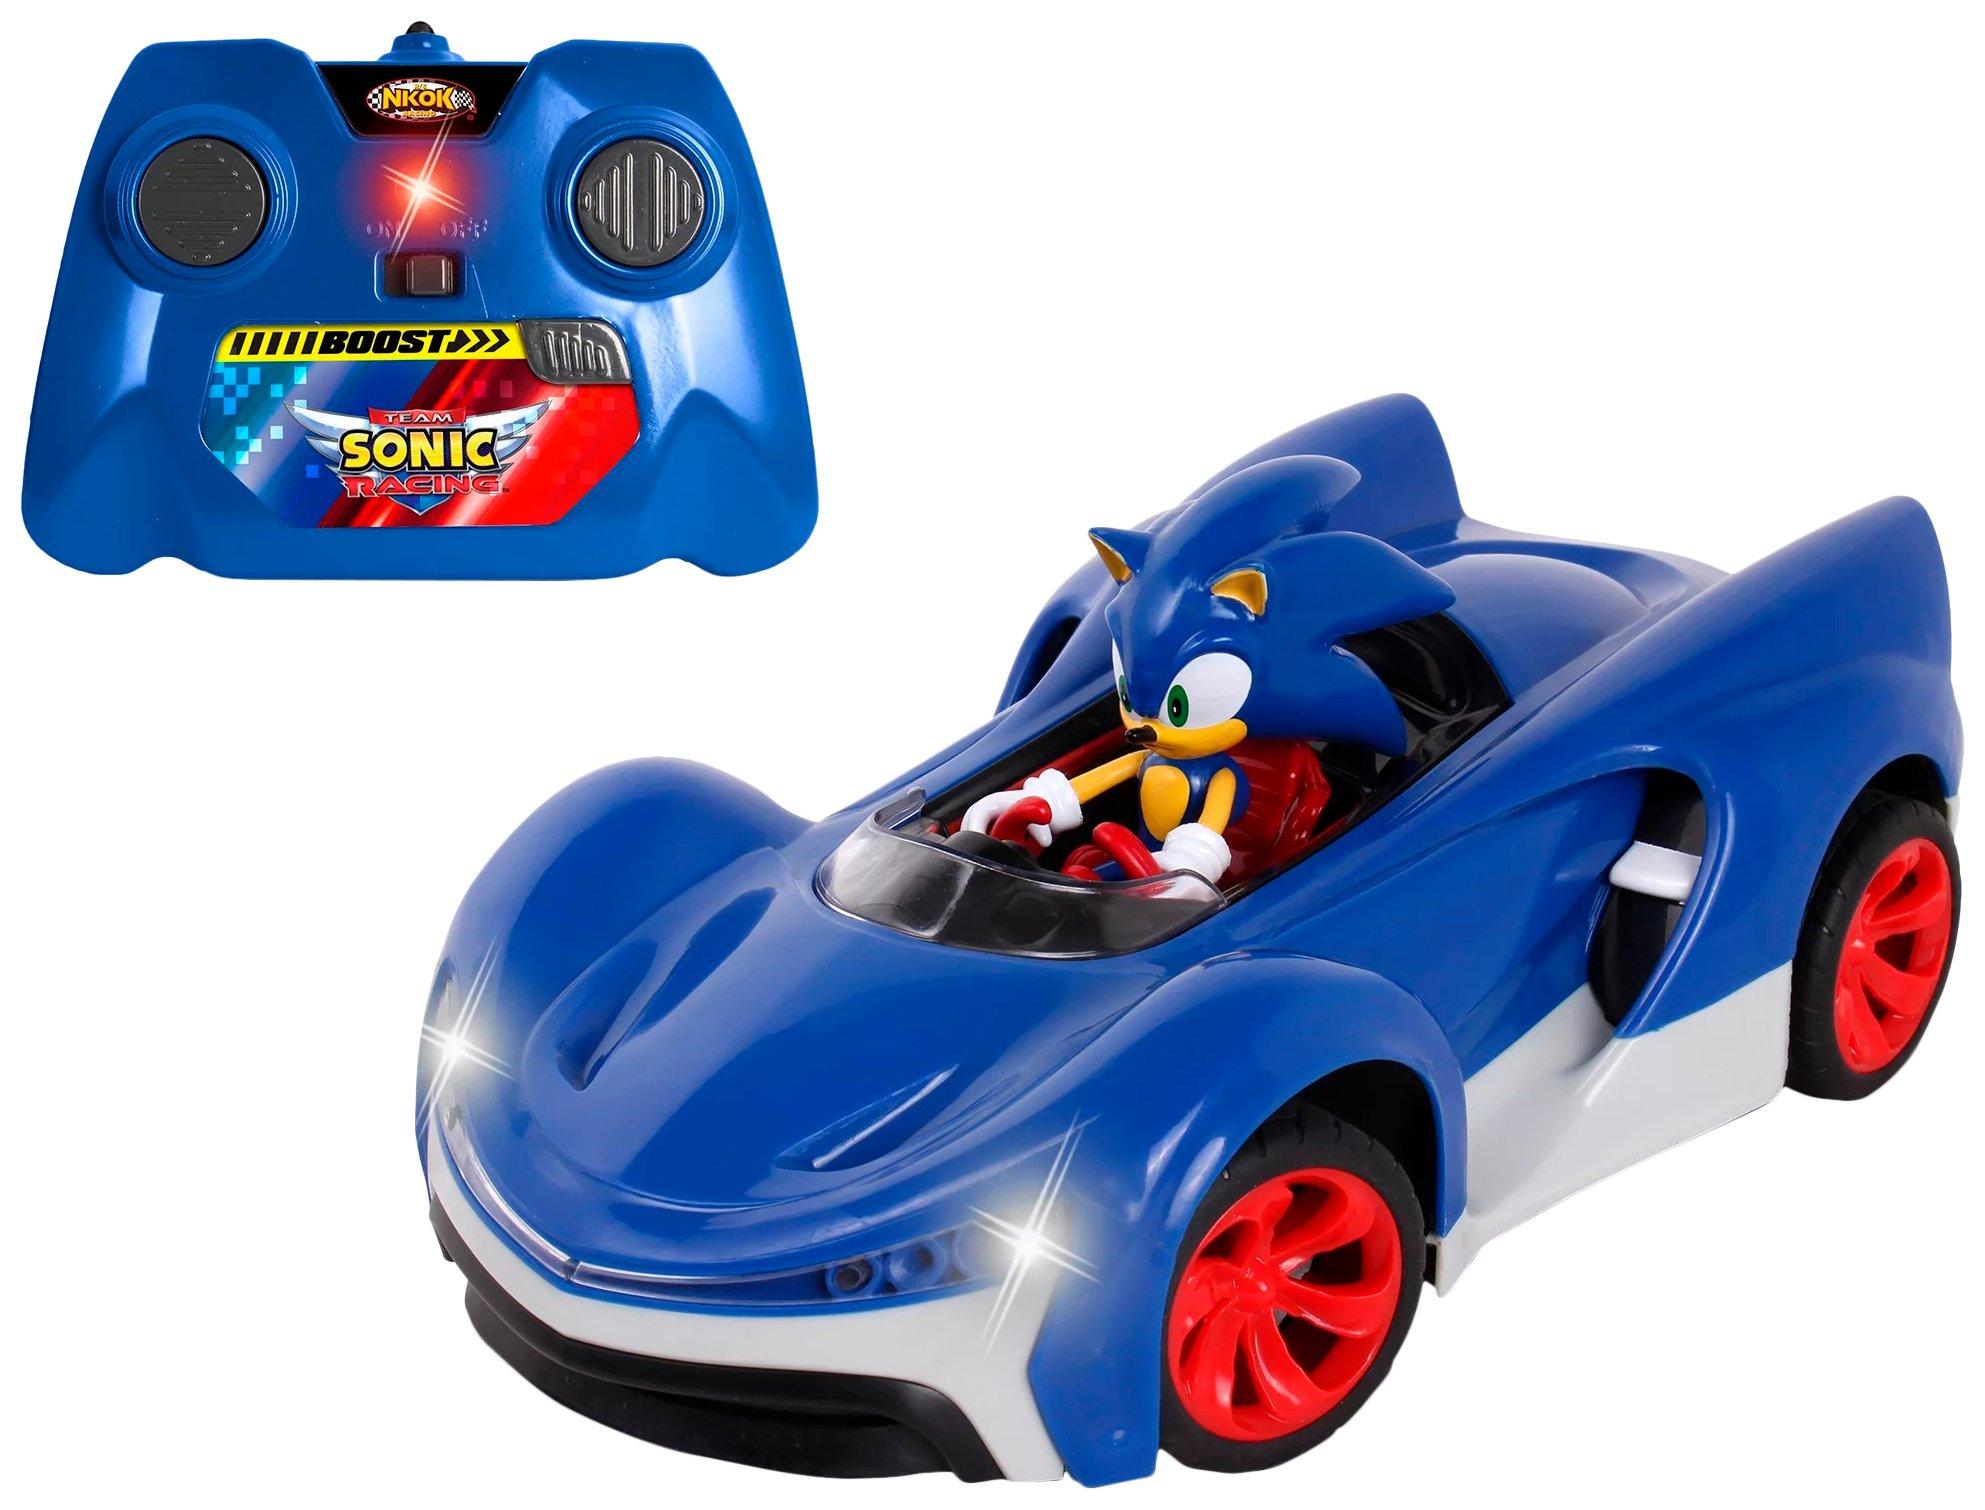 Racing 2.4GHz Radio Control Toy Car W/ Turbo Boost